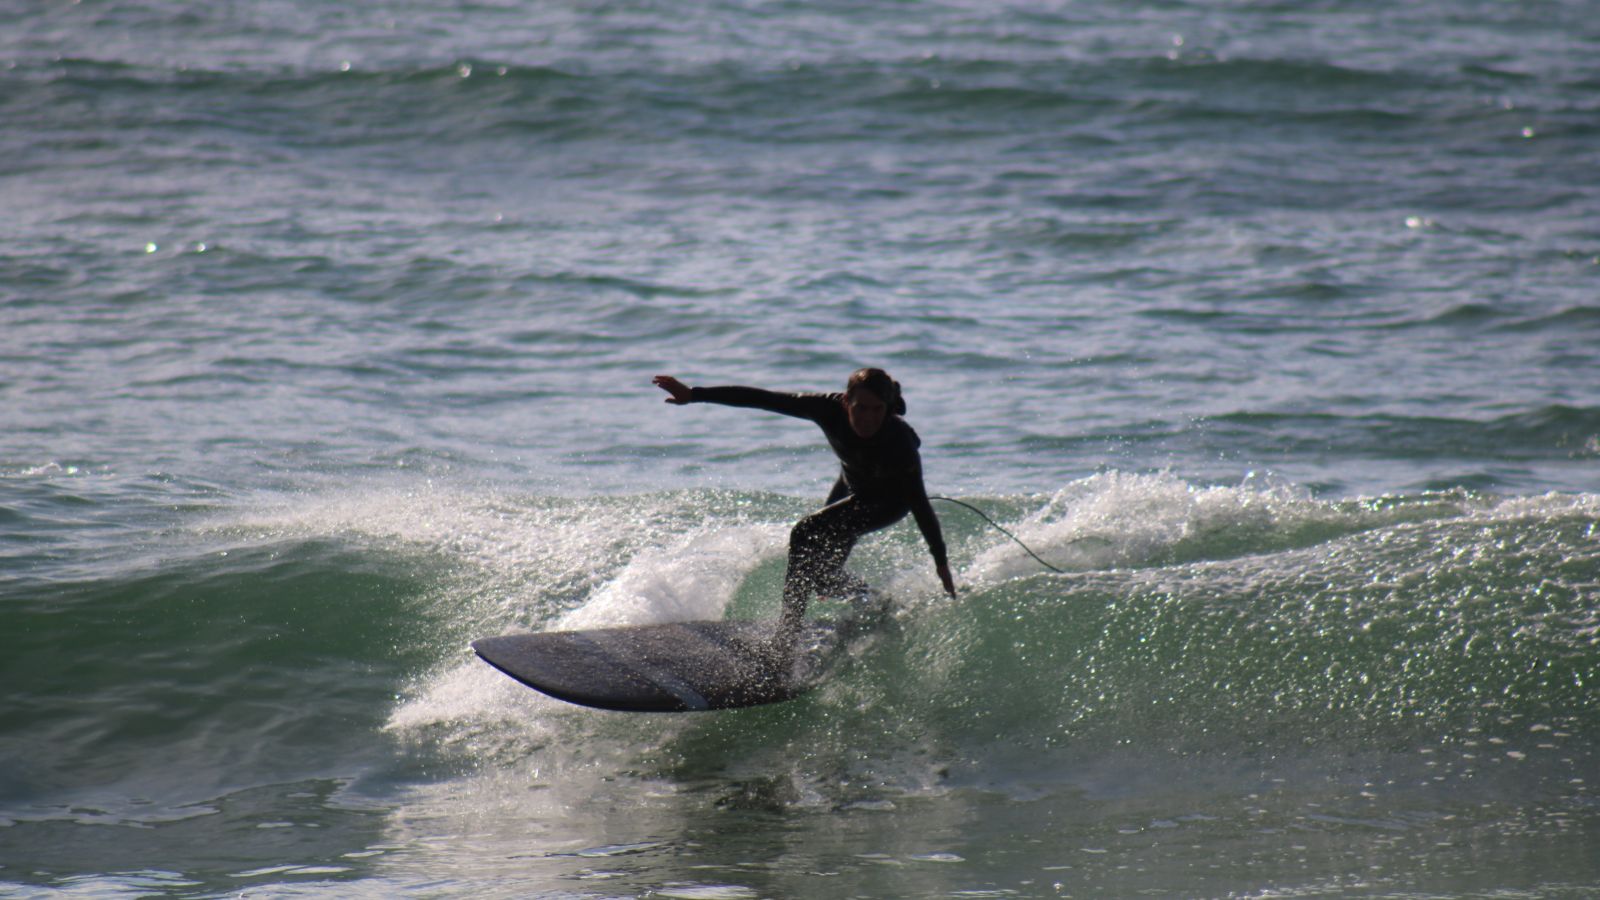 Kyla Langen enjoying the power of the ocean from her surfboard.